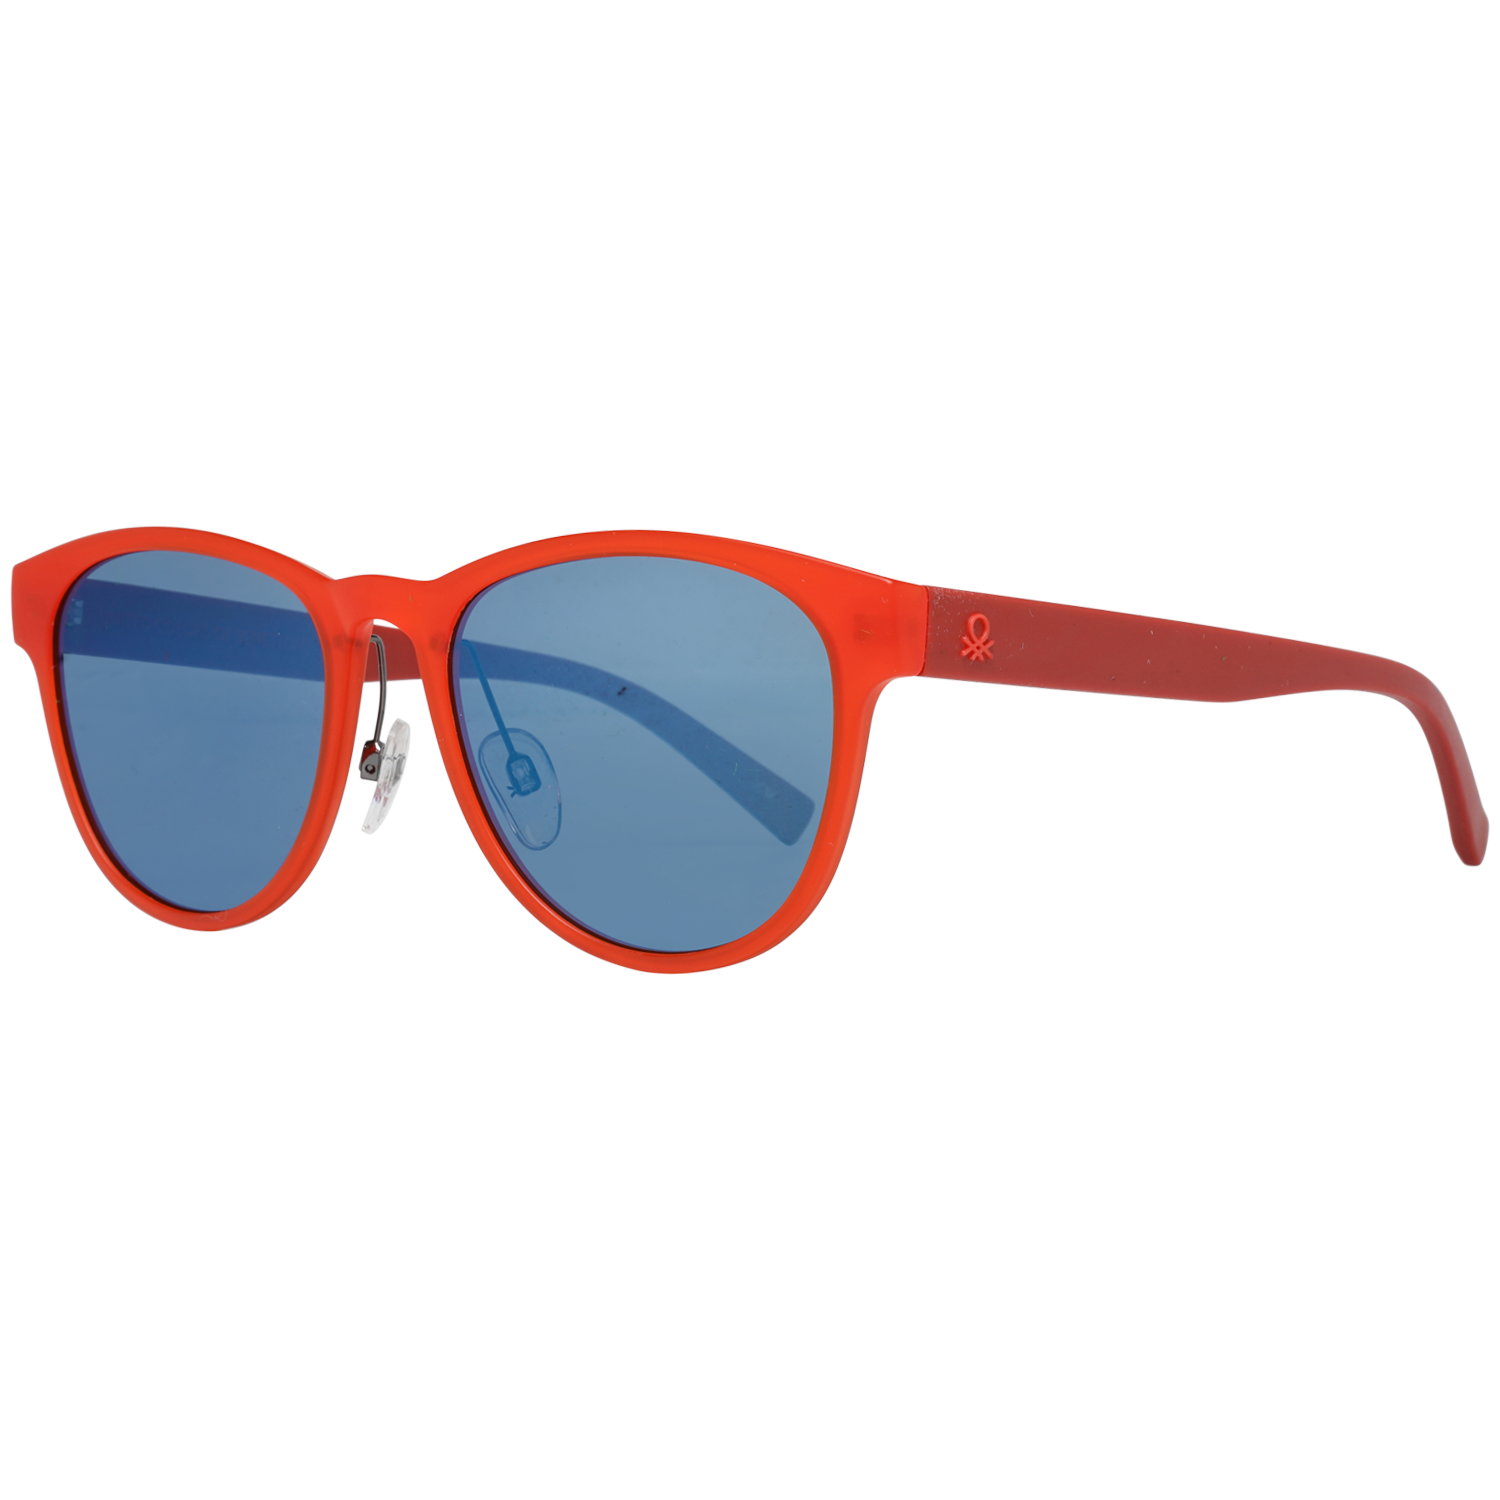 Benetton Sunglasses BE5011 202 55 Red